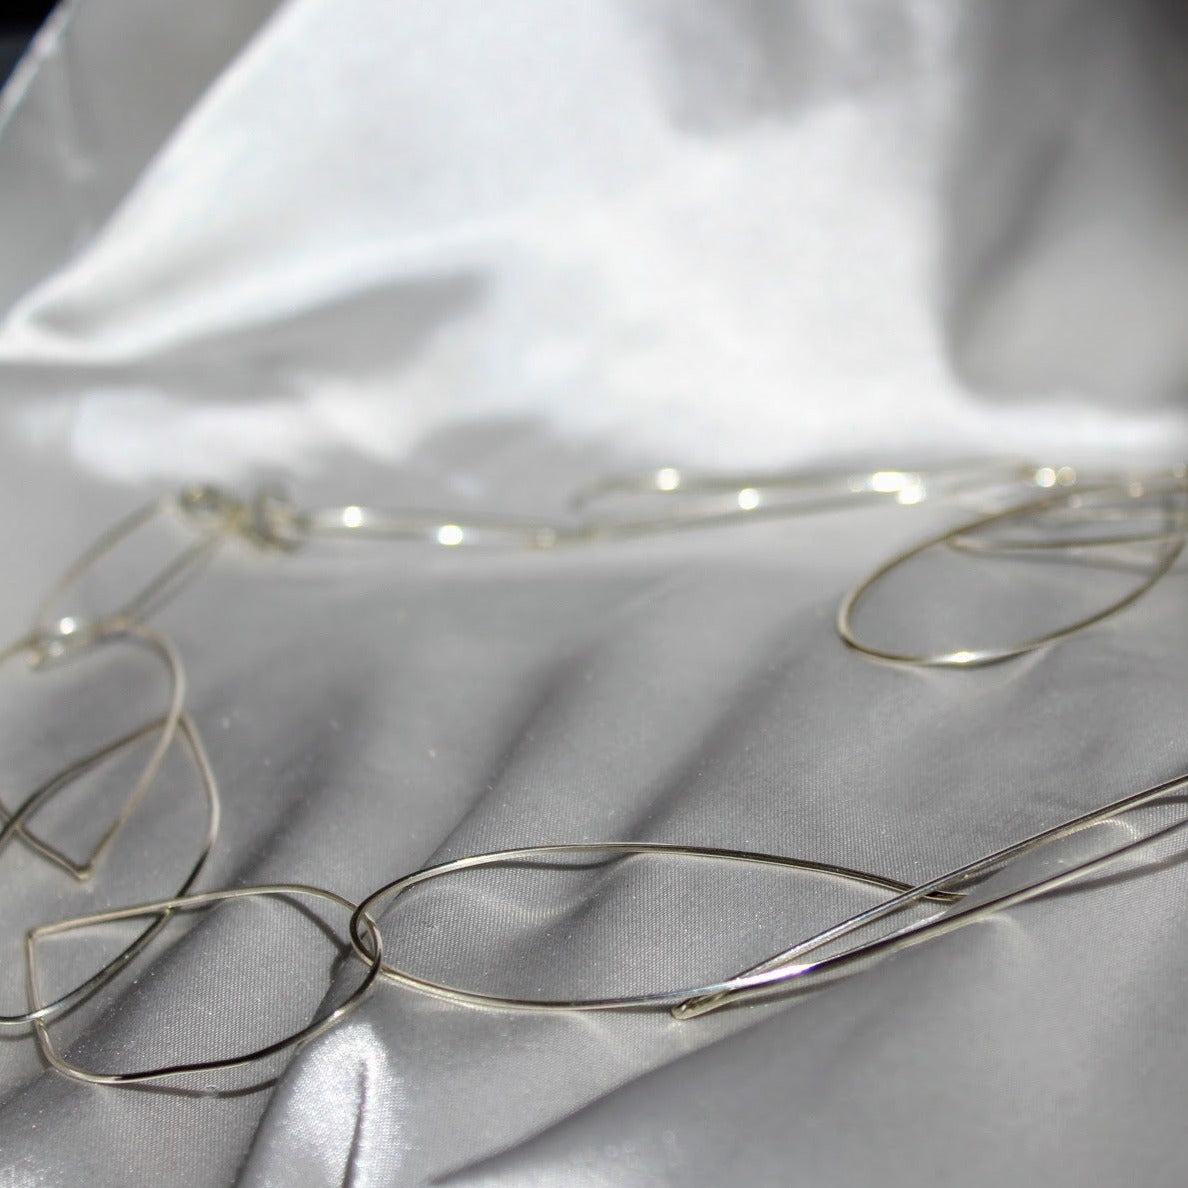 sterling silver handmade Cascade necklace. Each teardrop shaped loop is handmade on a grey silk background